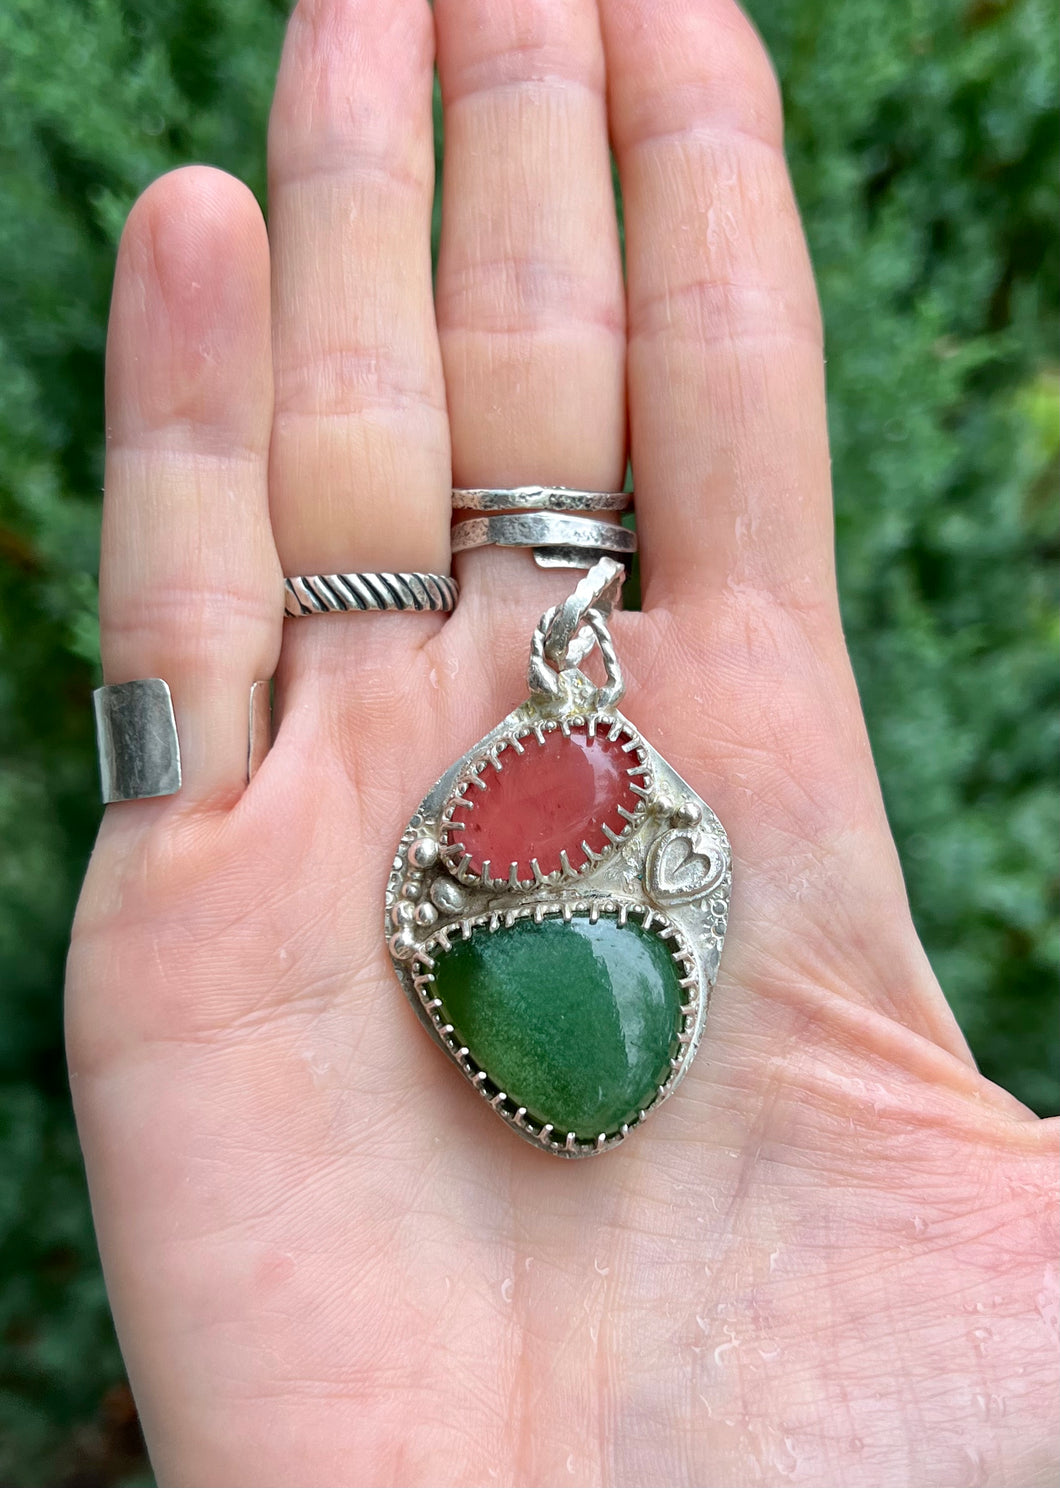 Cherry quartz and serpentine sterling pendant